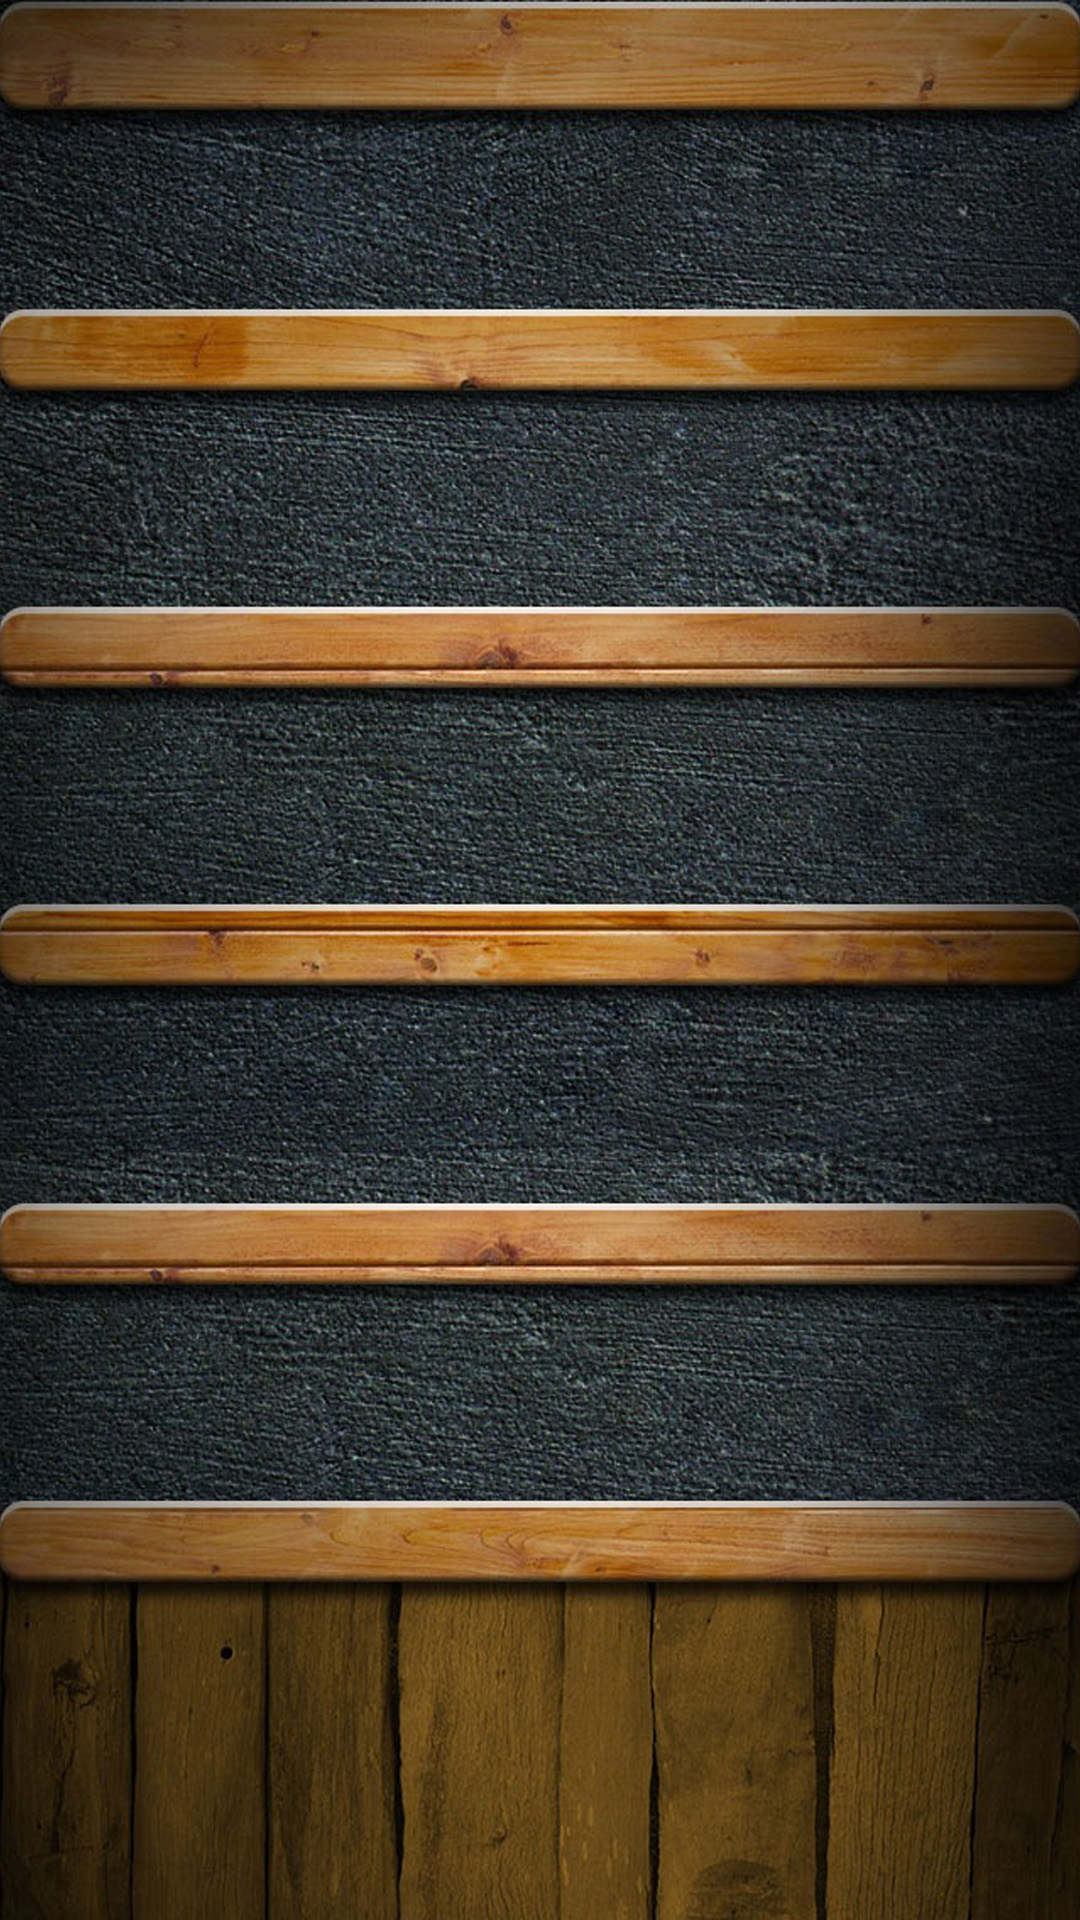 HD Wooden Shelves iPhone Wallpaper Background Car